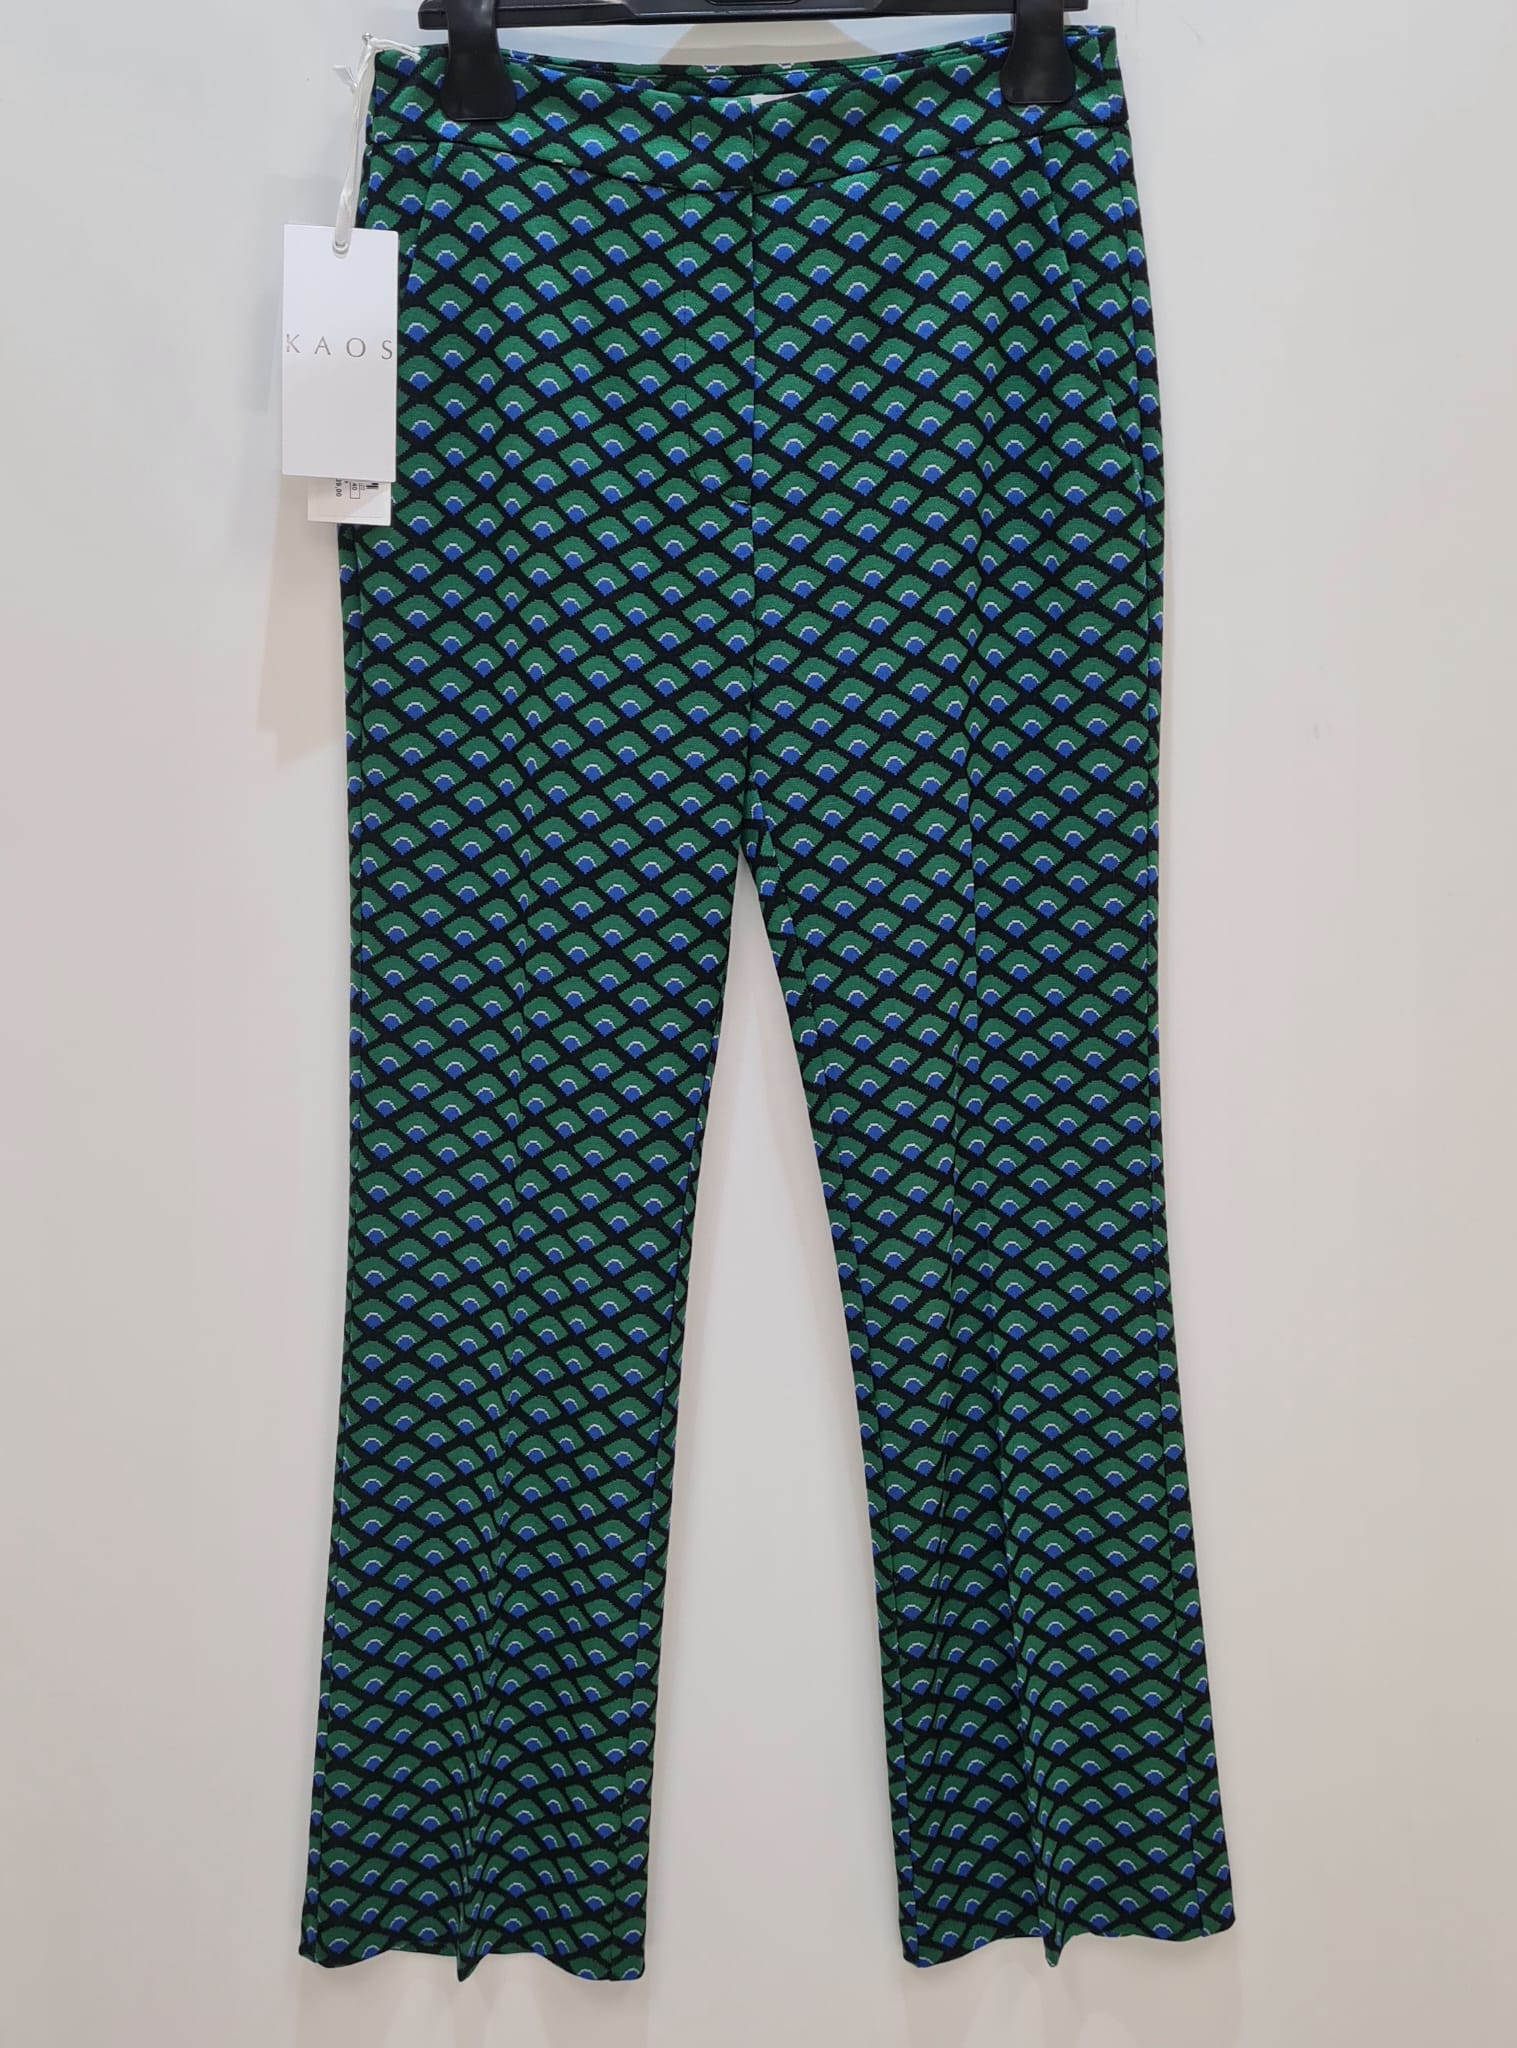 Pantalone KAOS maglia punto milano fantasia zampetta Verde